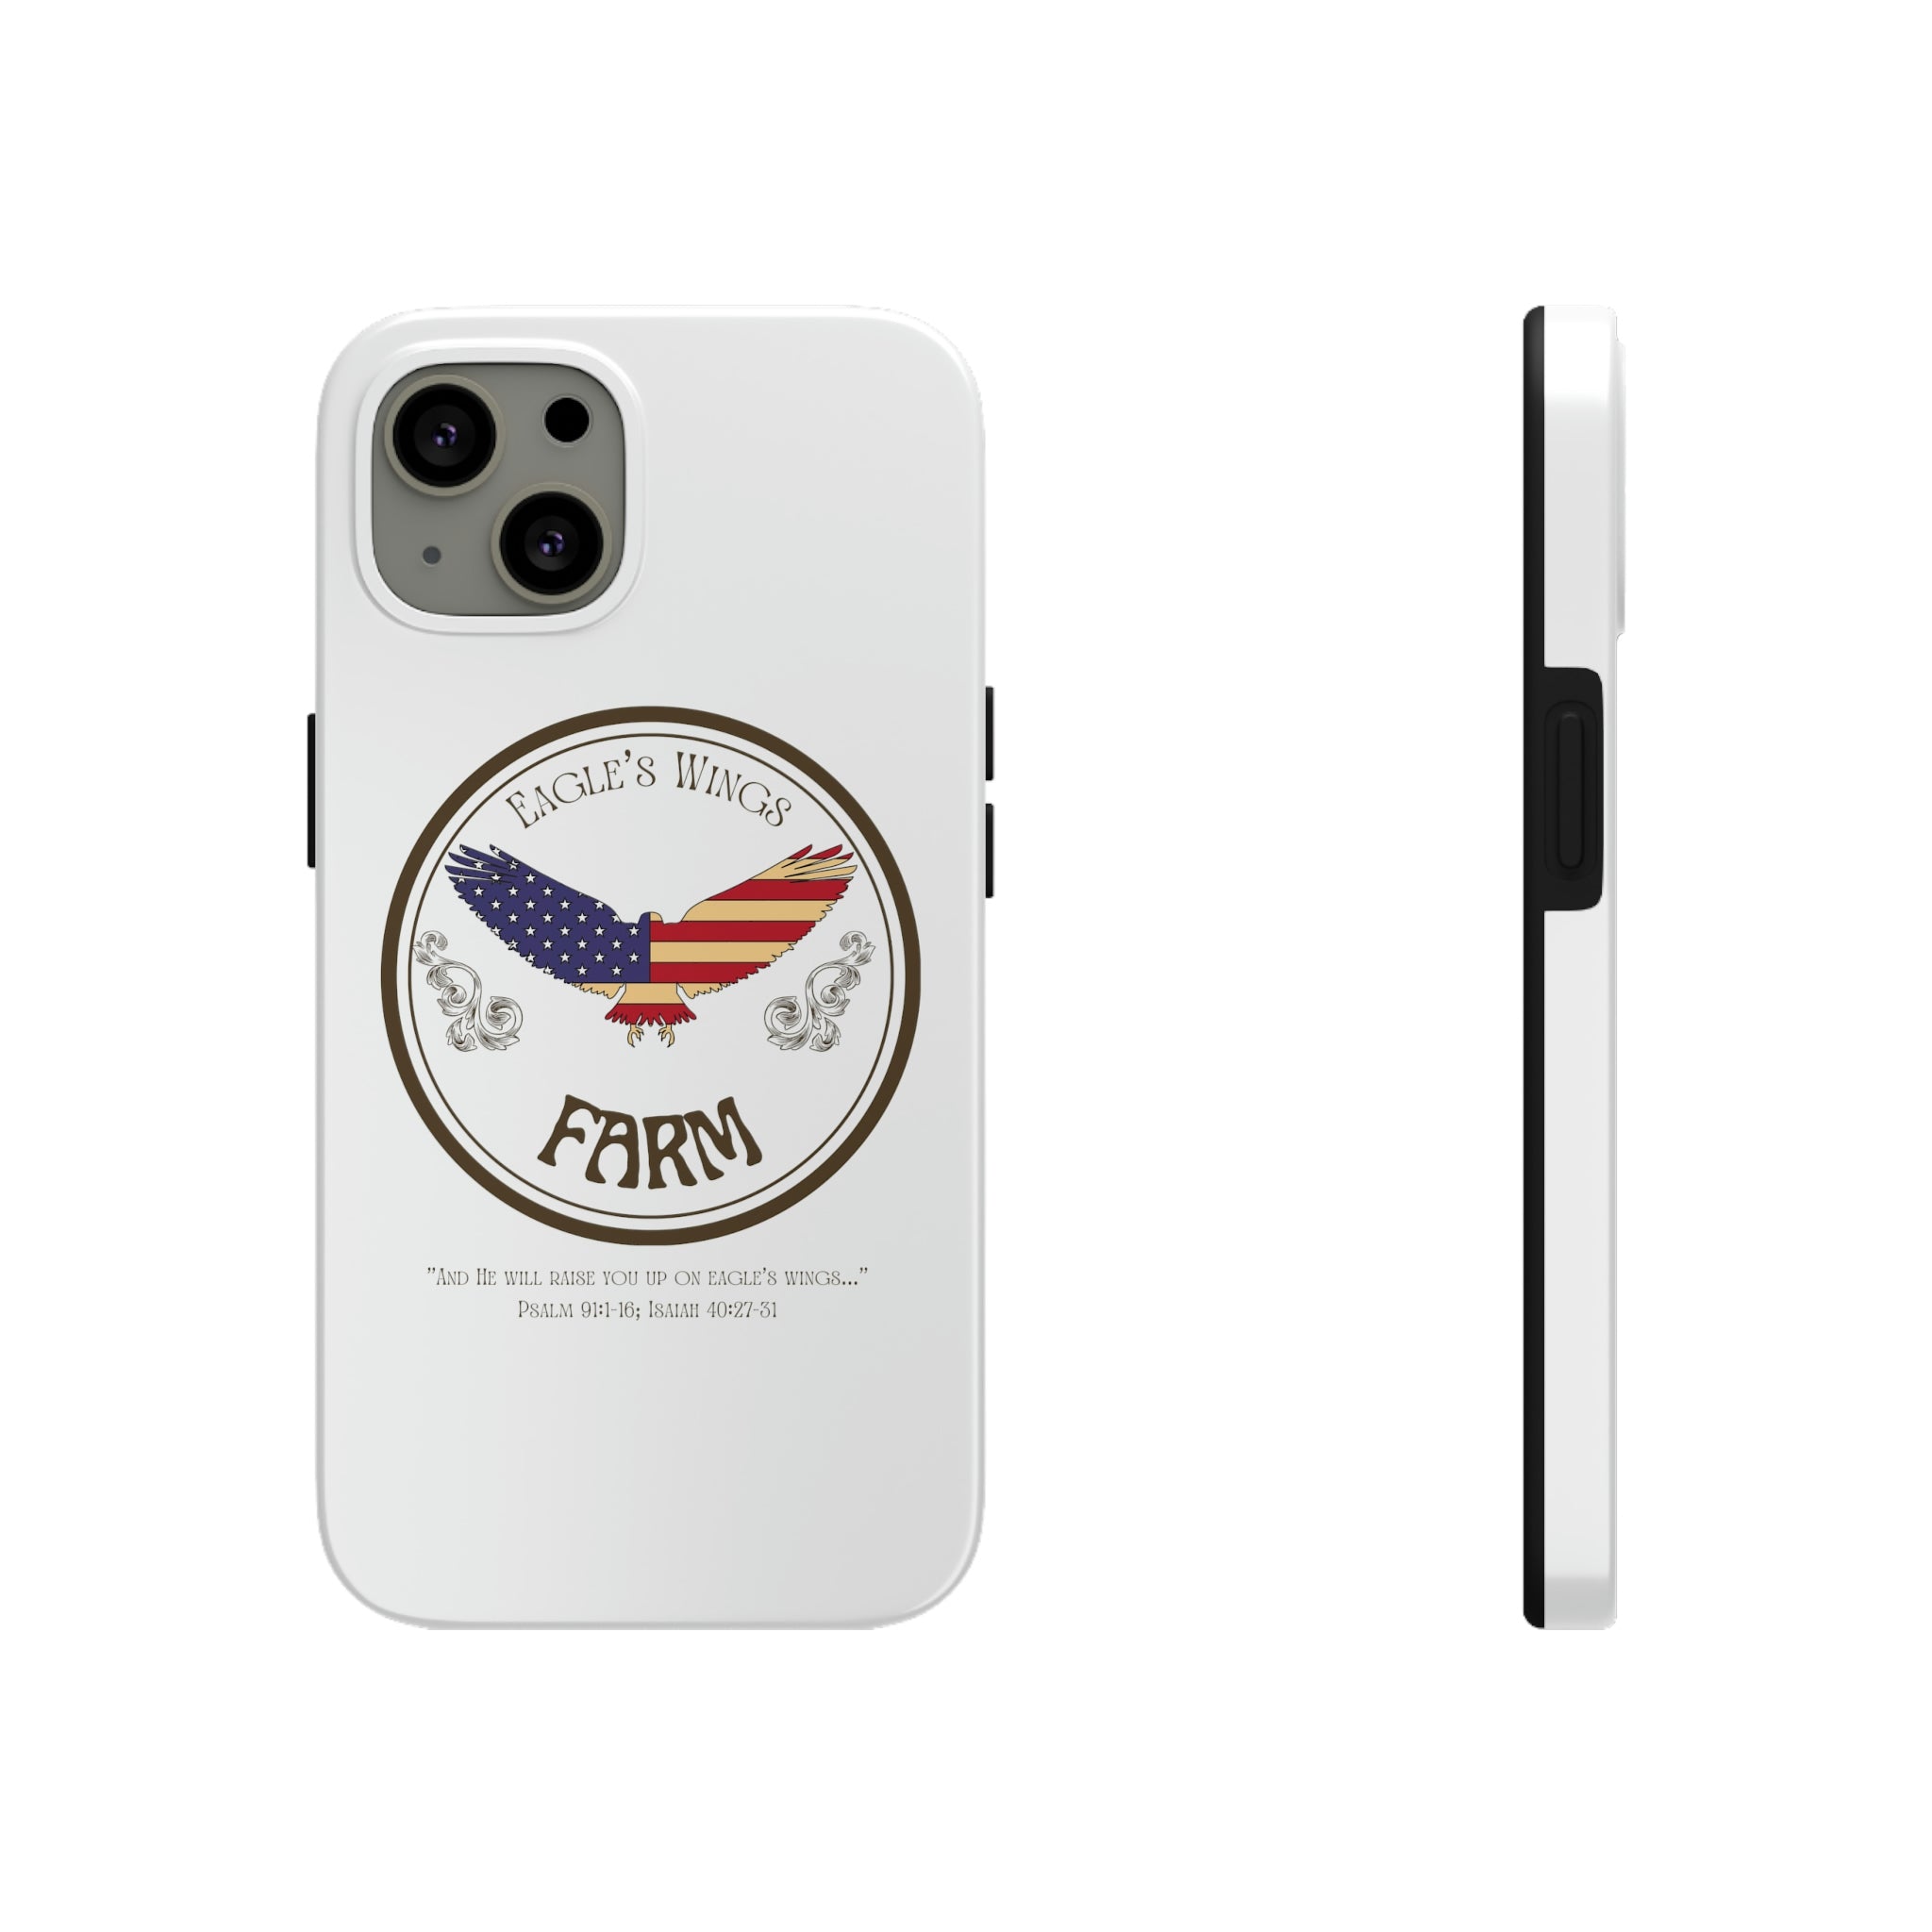 Eagle's Wings Farm - Tough iPhone Cases